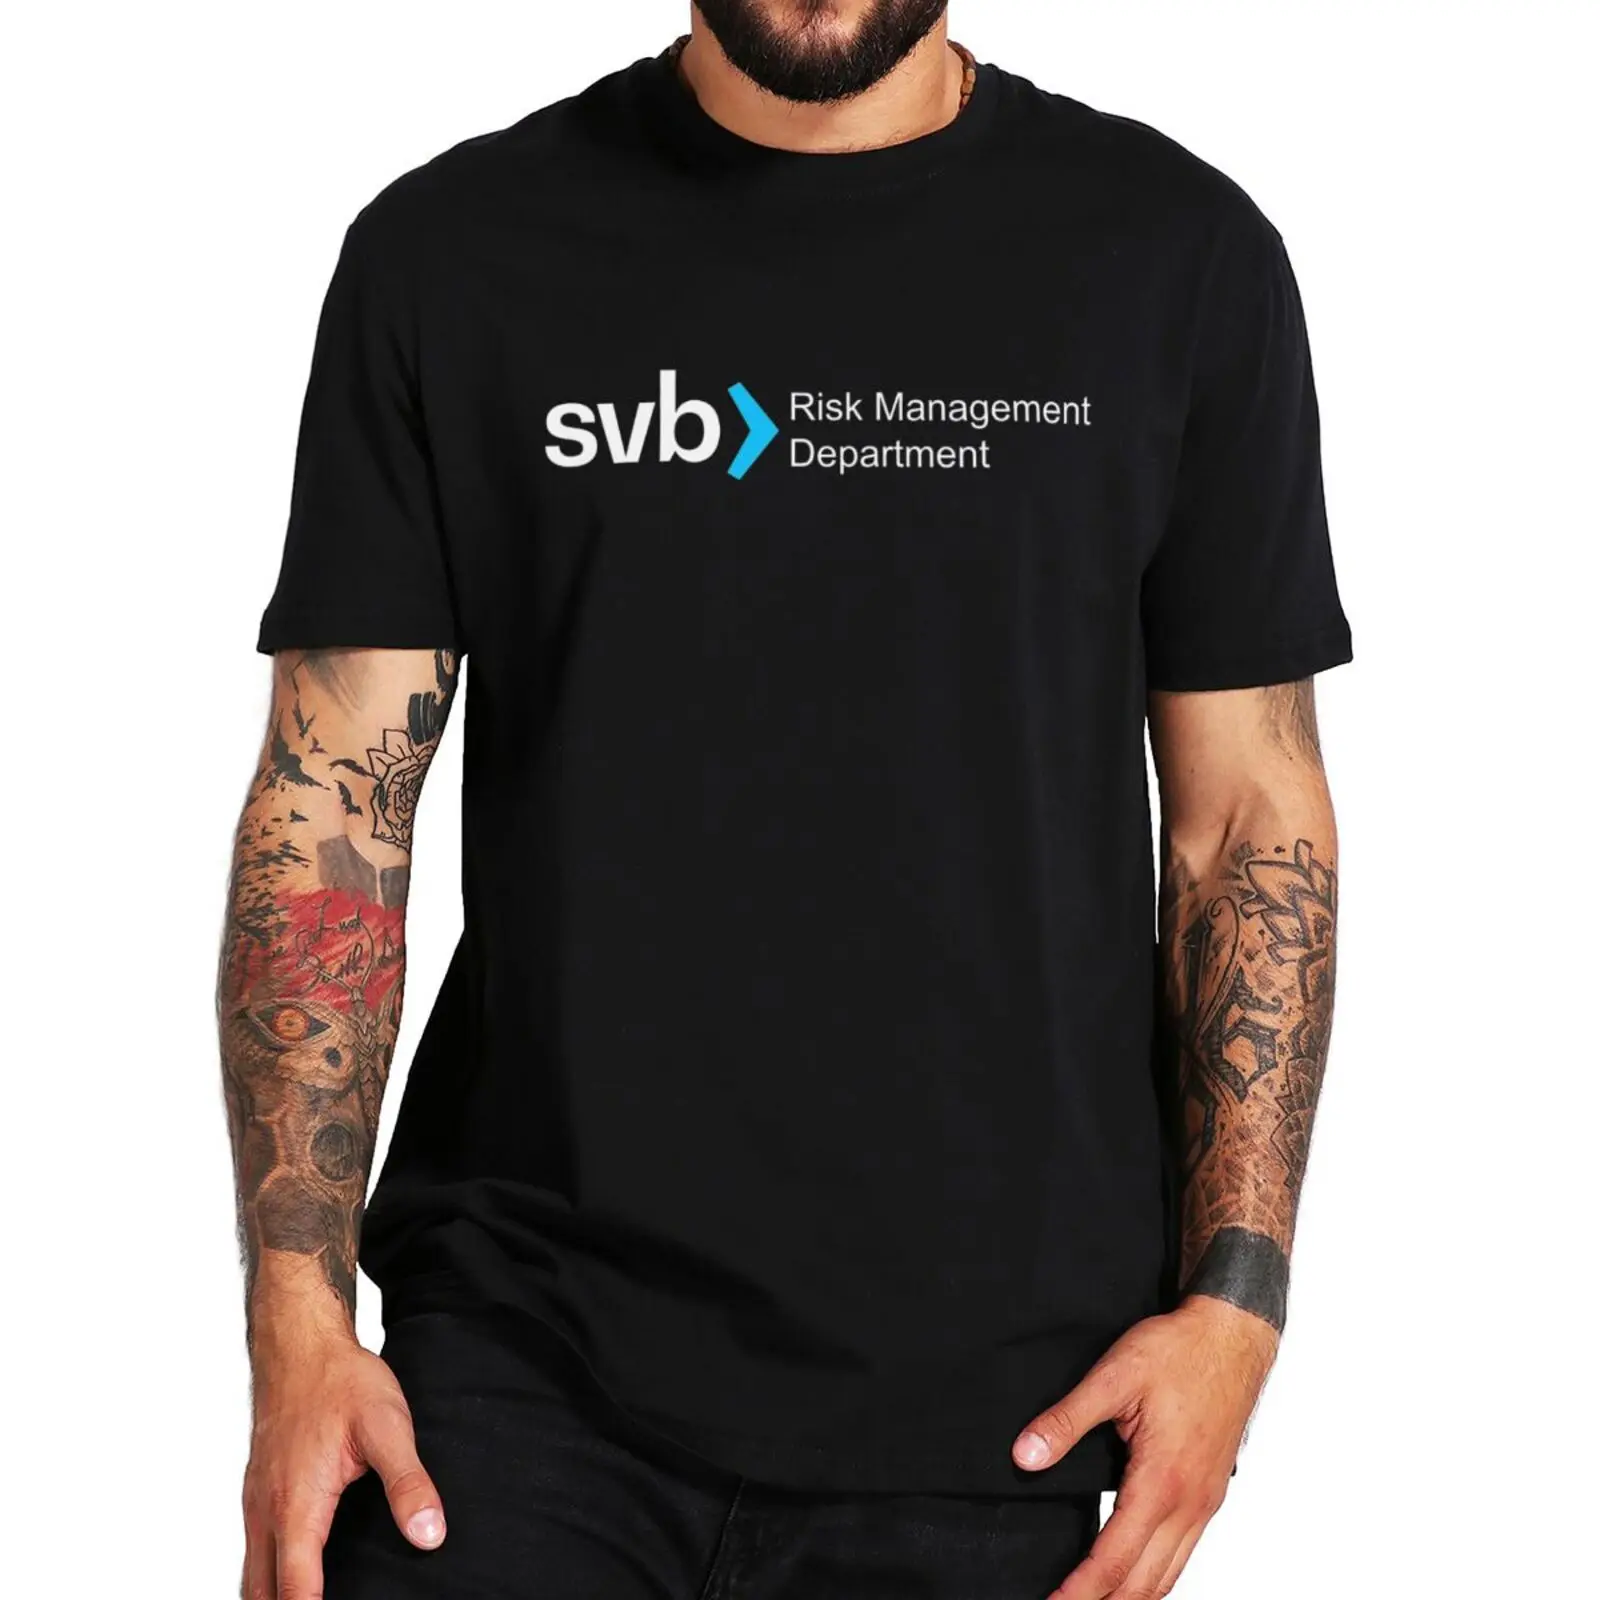 SVB Risk Management 2023 T Shirt Funny Finance Meme Humor Geek Short Sleeve EU Size O-neck 100% Cotton Unisex Casual Tee Tops